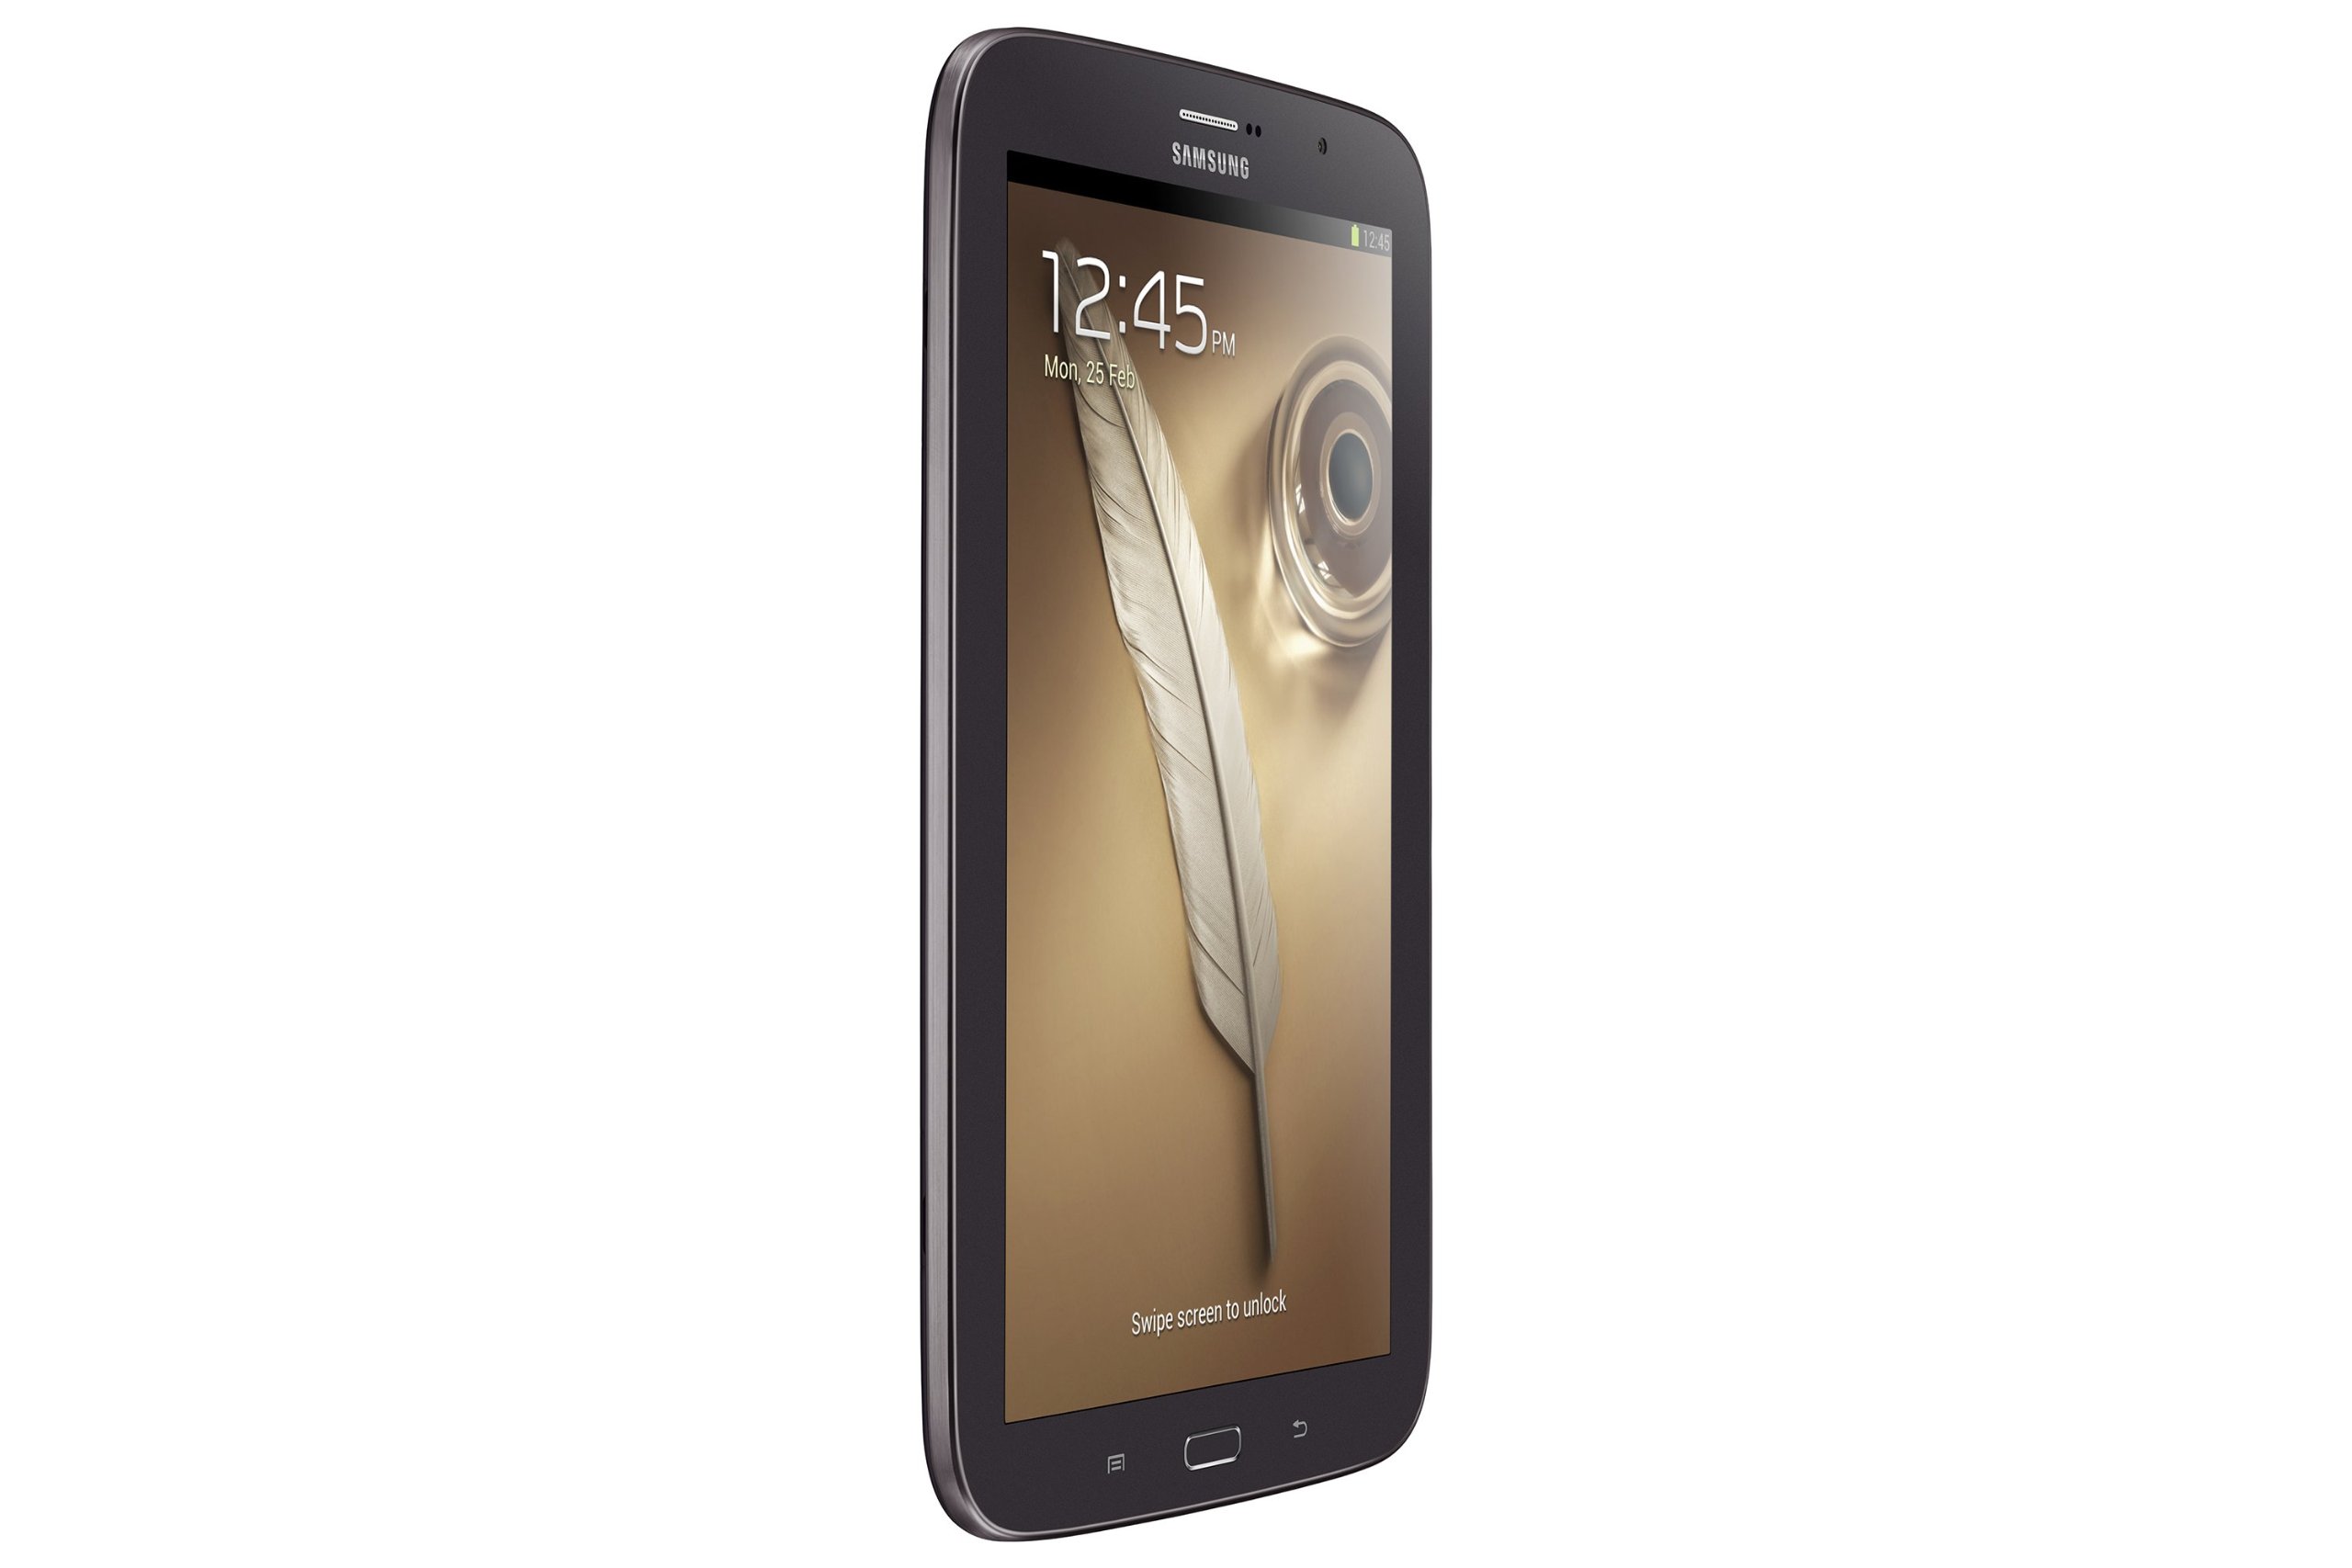 Samsung Galaxy Note 8.0 (16GB, Brown-Black) 2013 Model